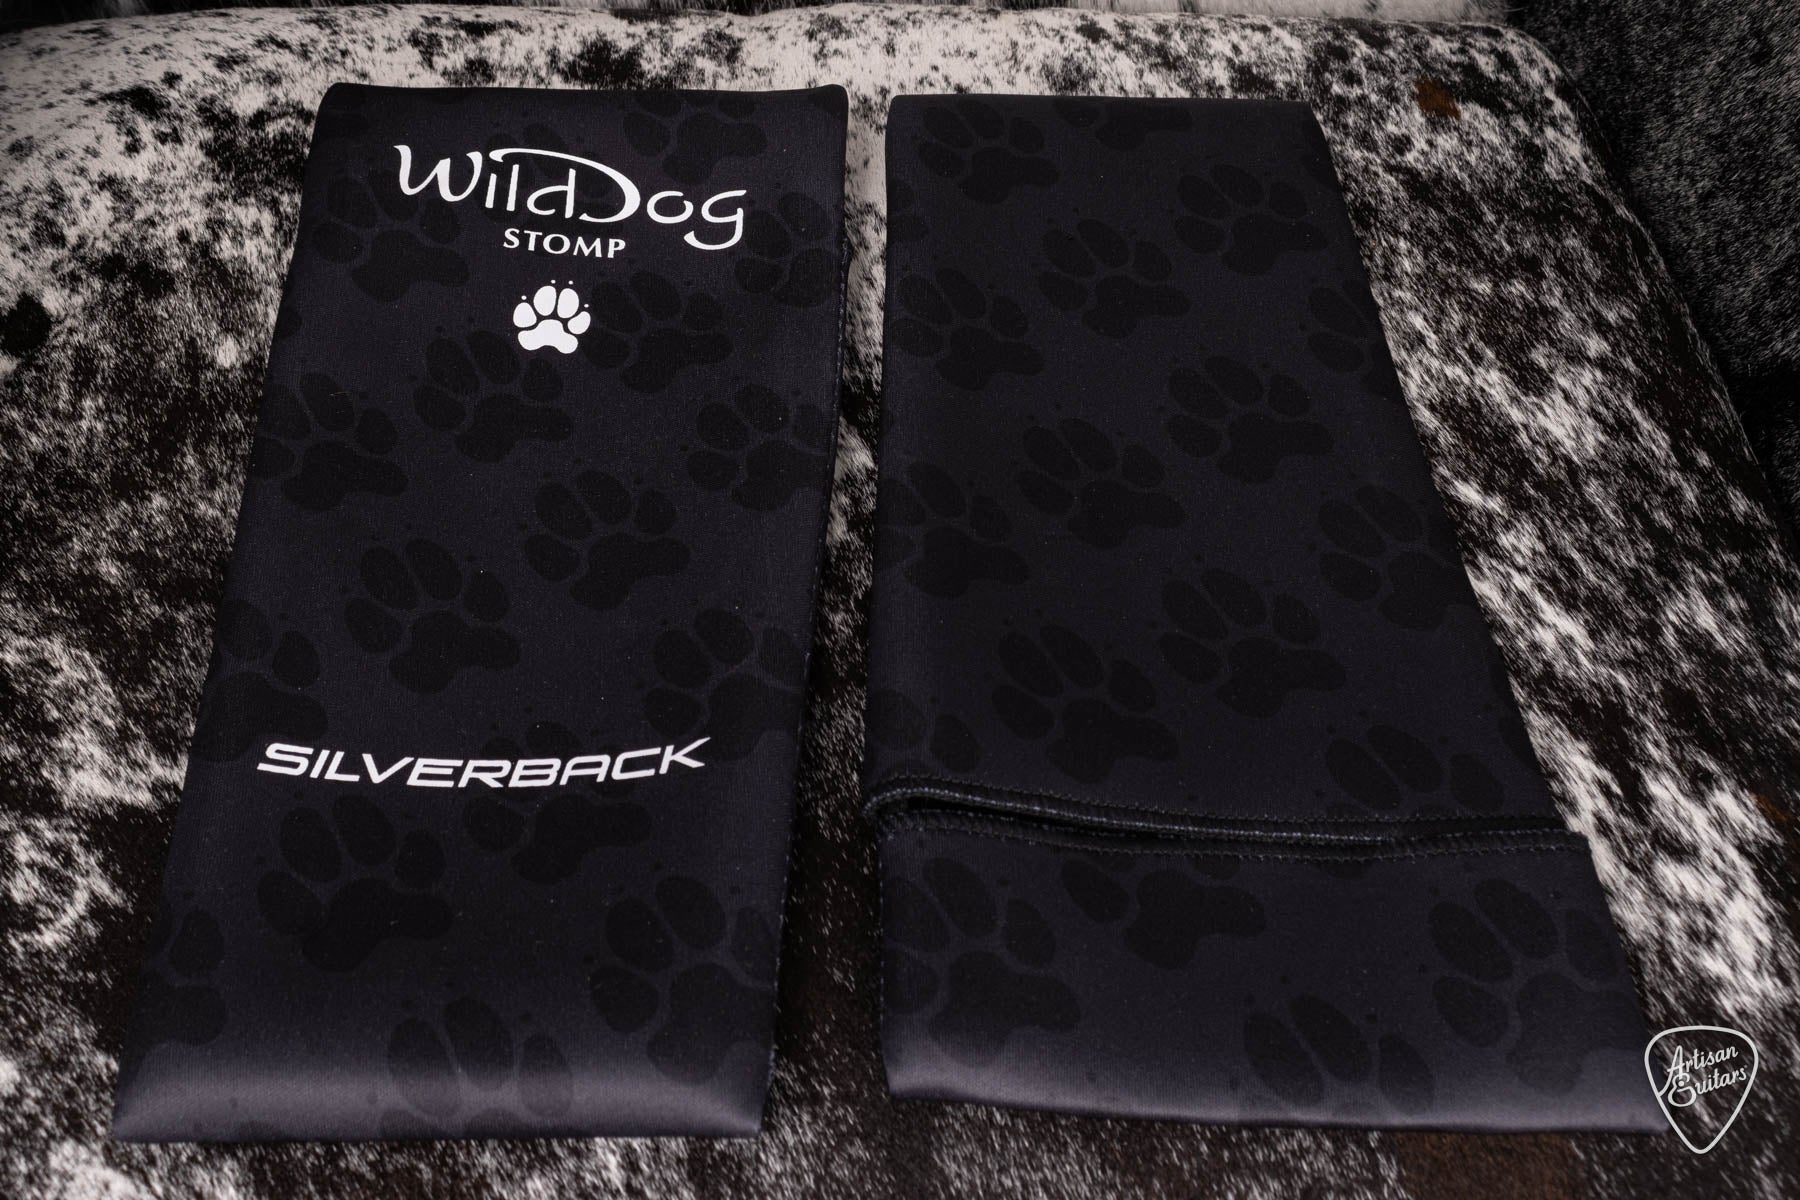 Wild Dog Silverback Stomp Box w/ Bamboo Timber & Tamborine Jingles - WD-411022